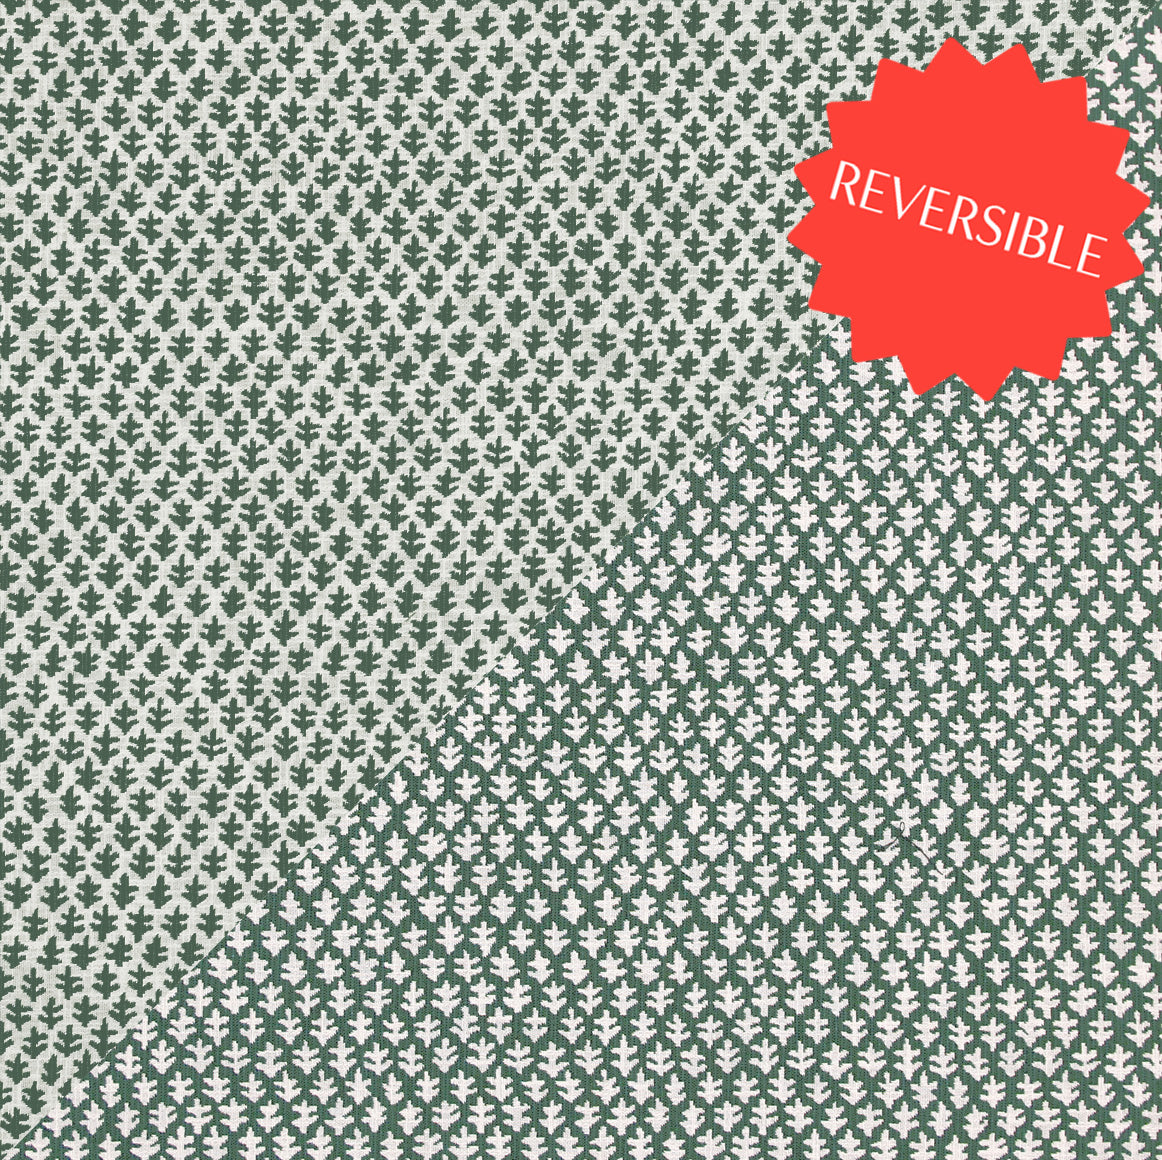 Burma Performance Fabric( Reversible)